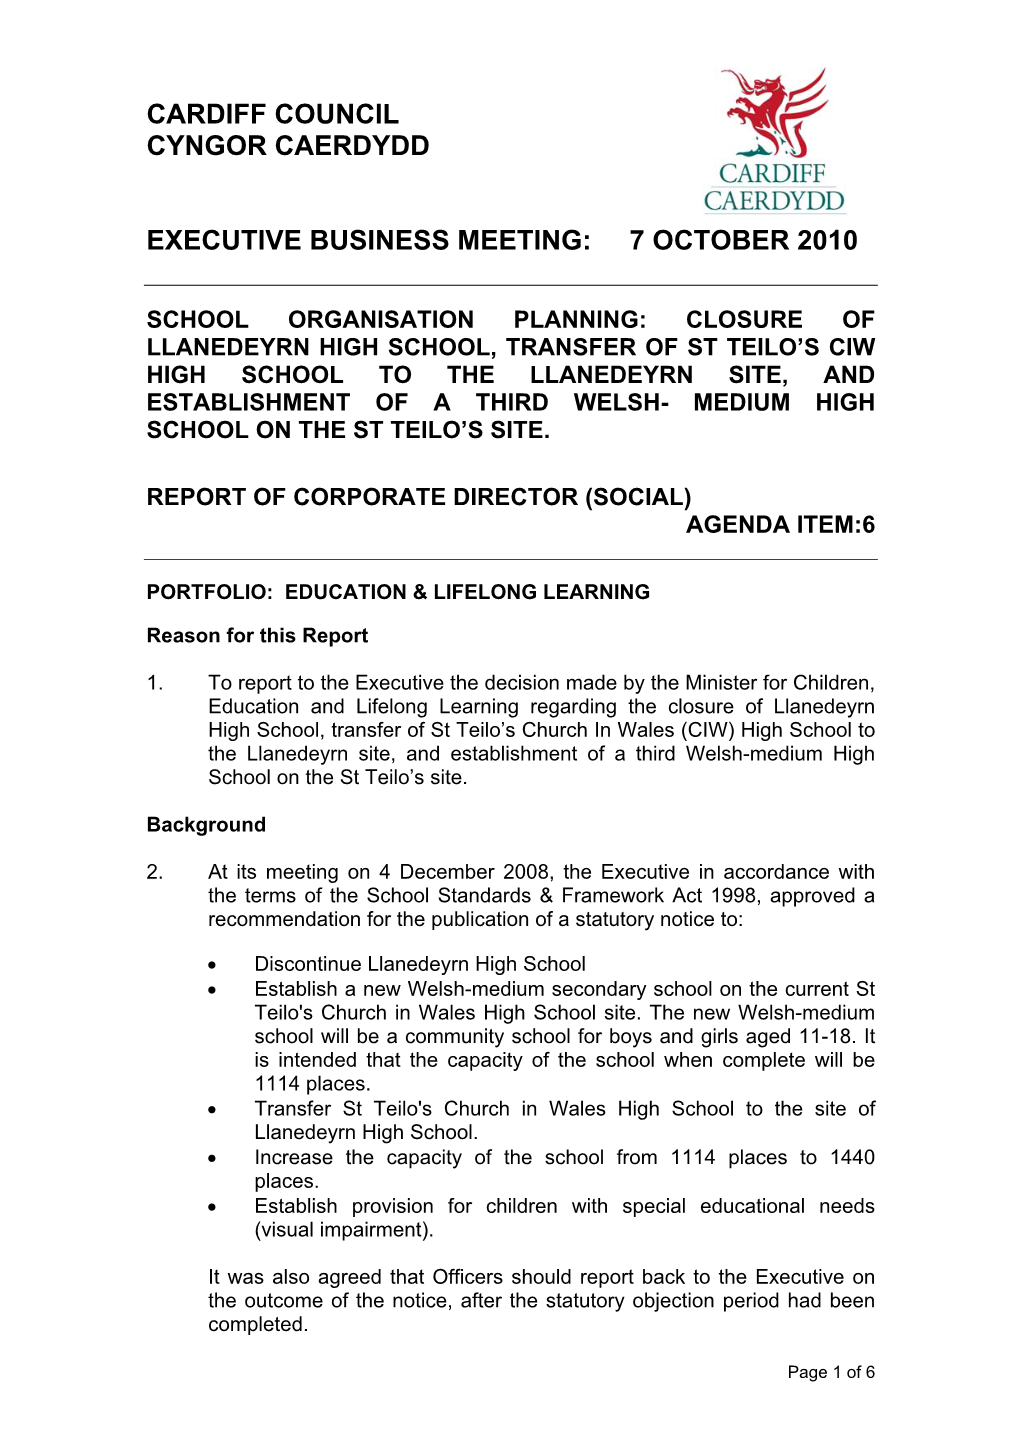 Cardiff Council Cyngor Caerdydd Executive Business Meeting: 7 October 2010